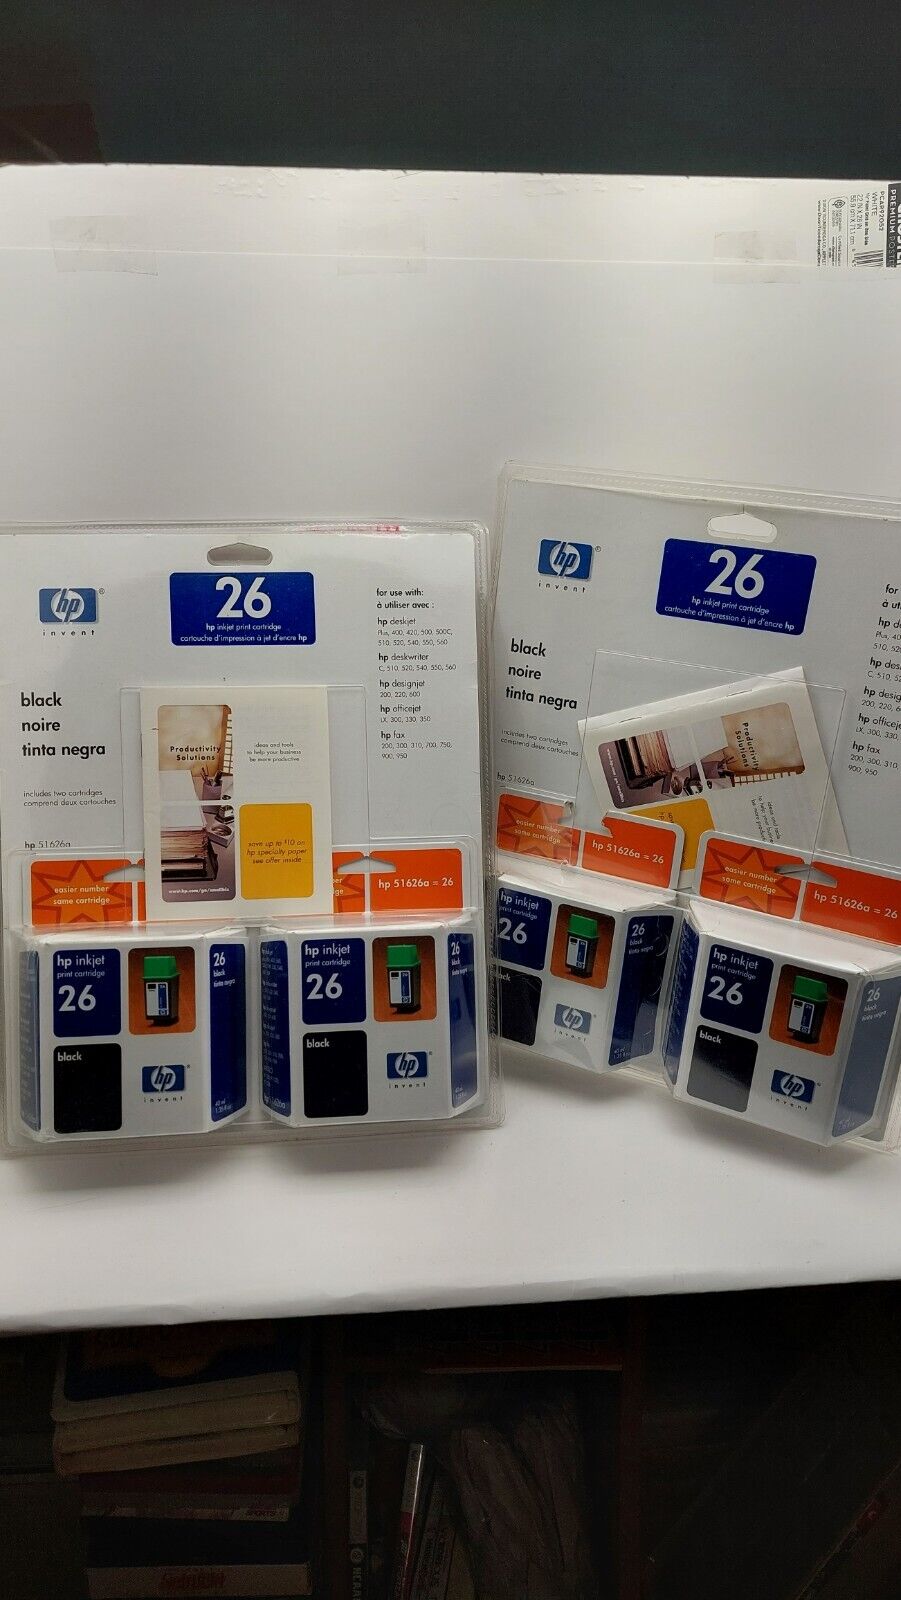 (2) HP inkjet 26 Printing Fun Kit 2002 Unopened/Expired 2 Ink Cartridges Vintage